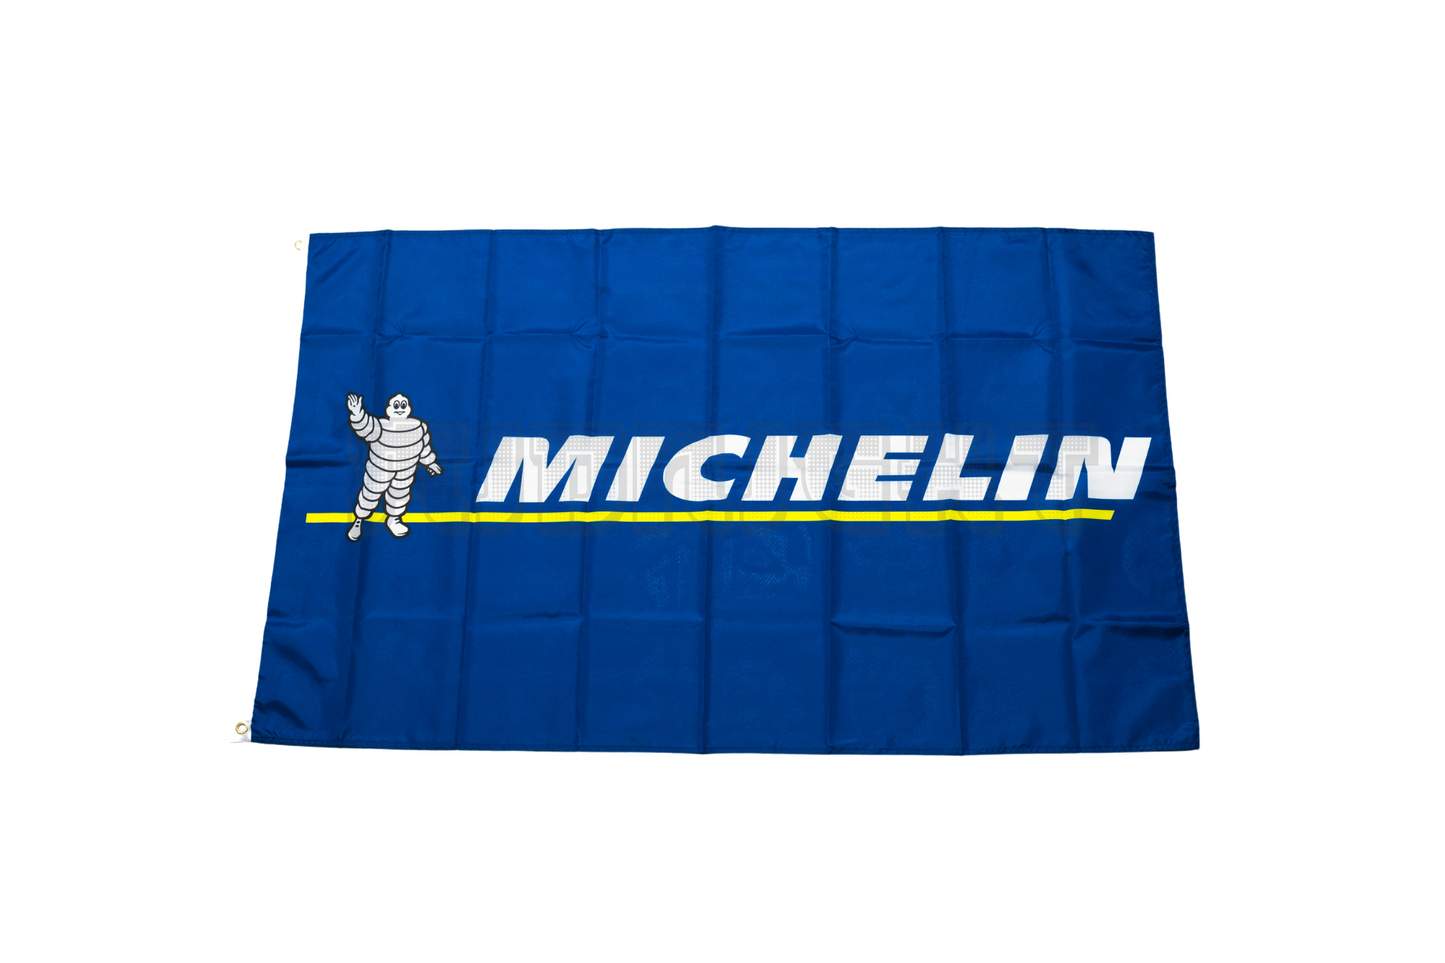 MICHELIN Flag